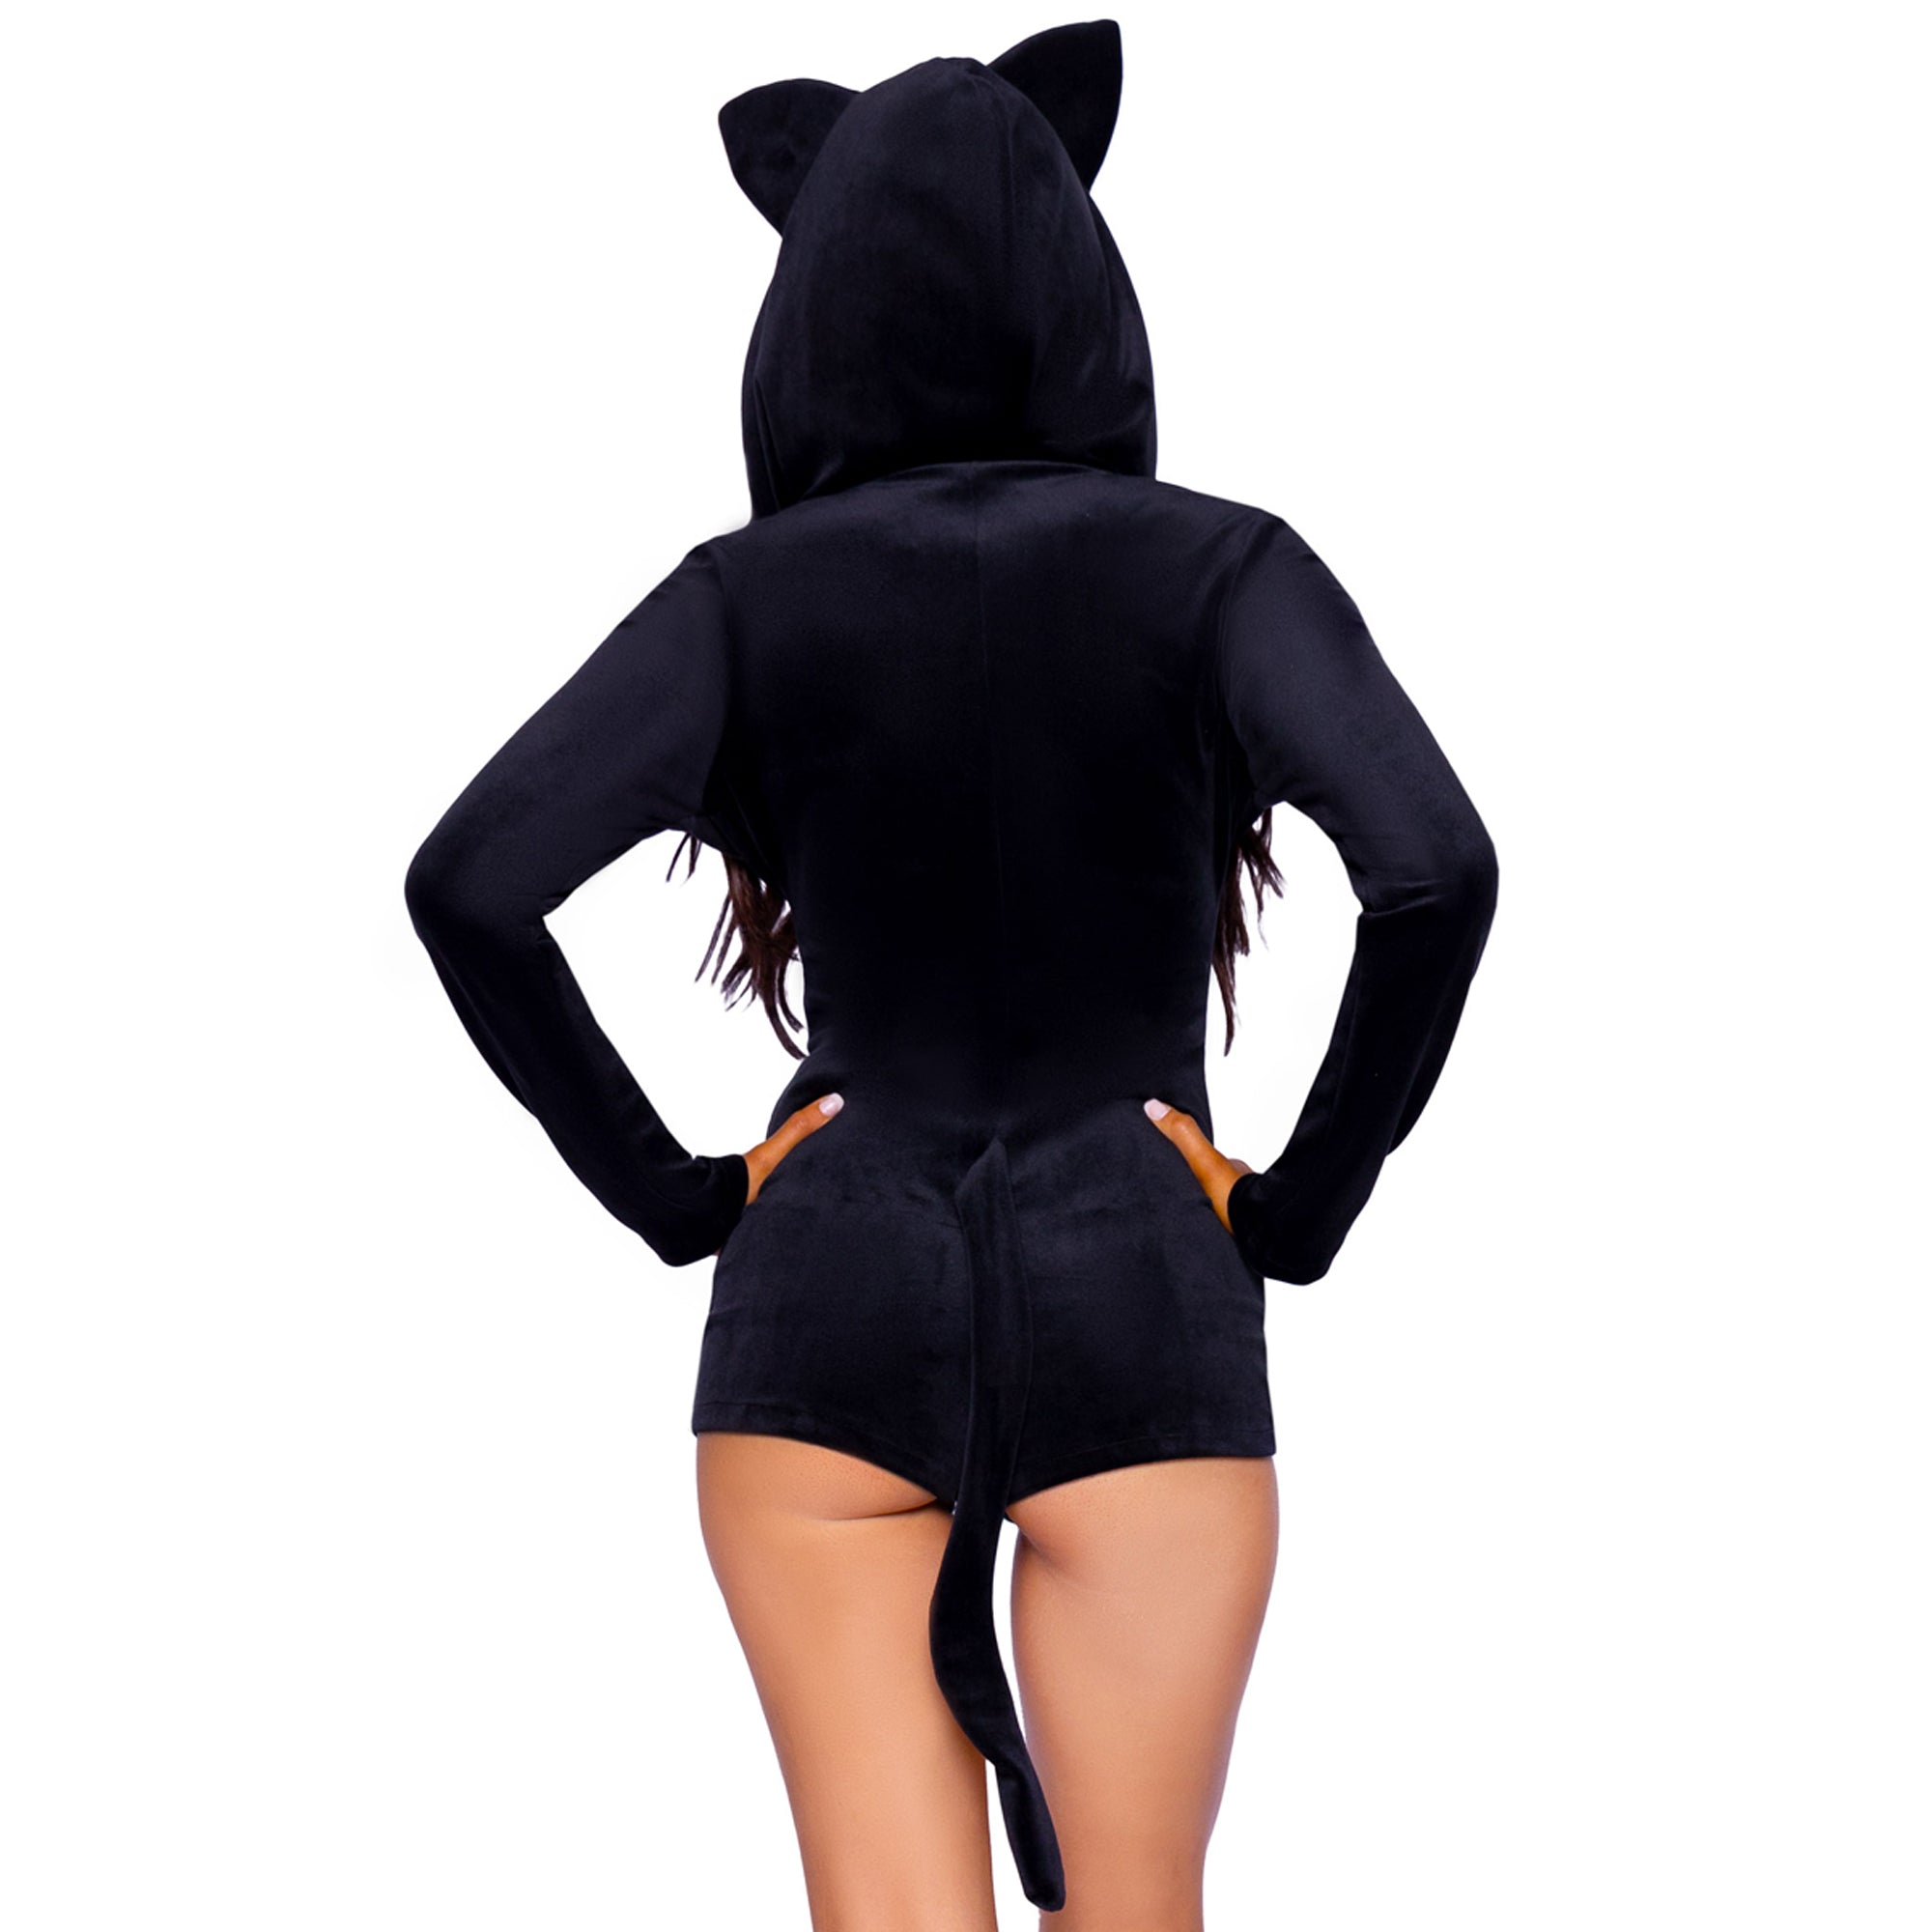 Ultra Soft Black Cat Sexy Costume for Adults, Black Romper